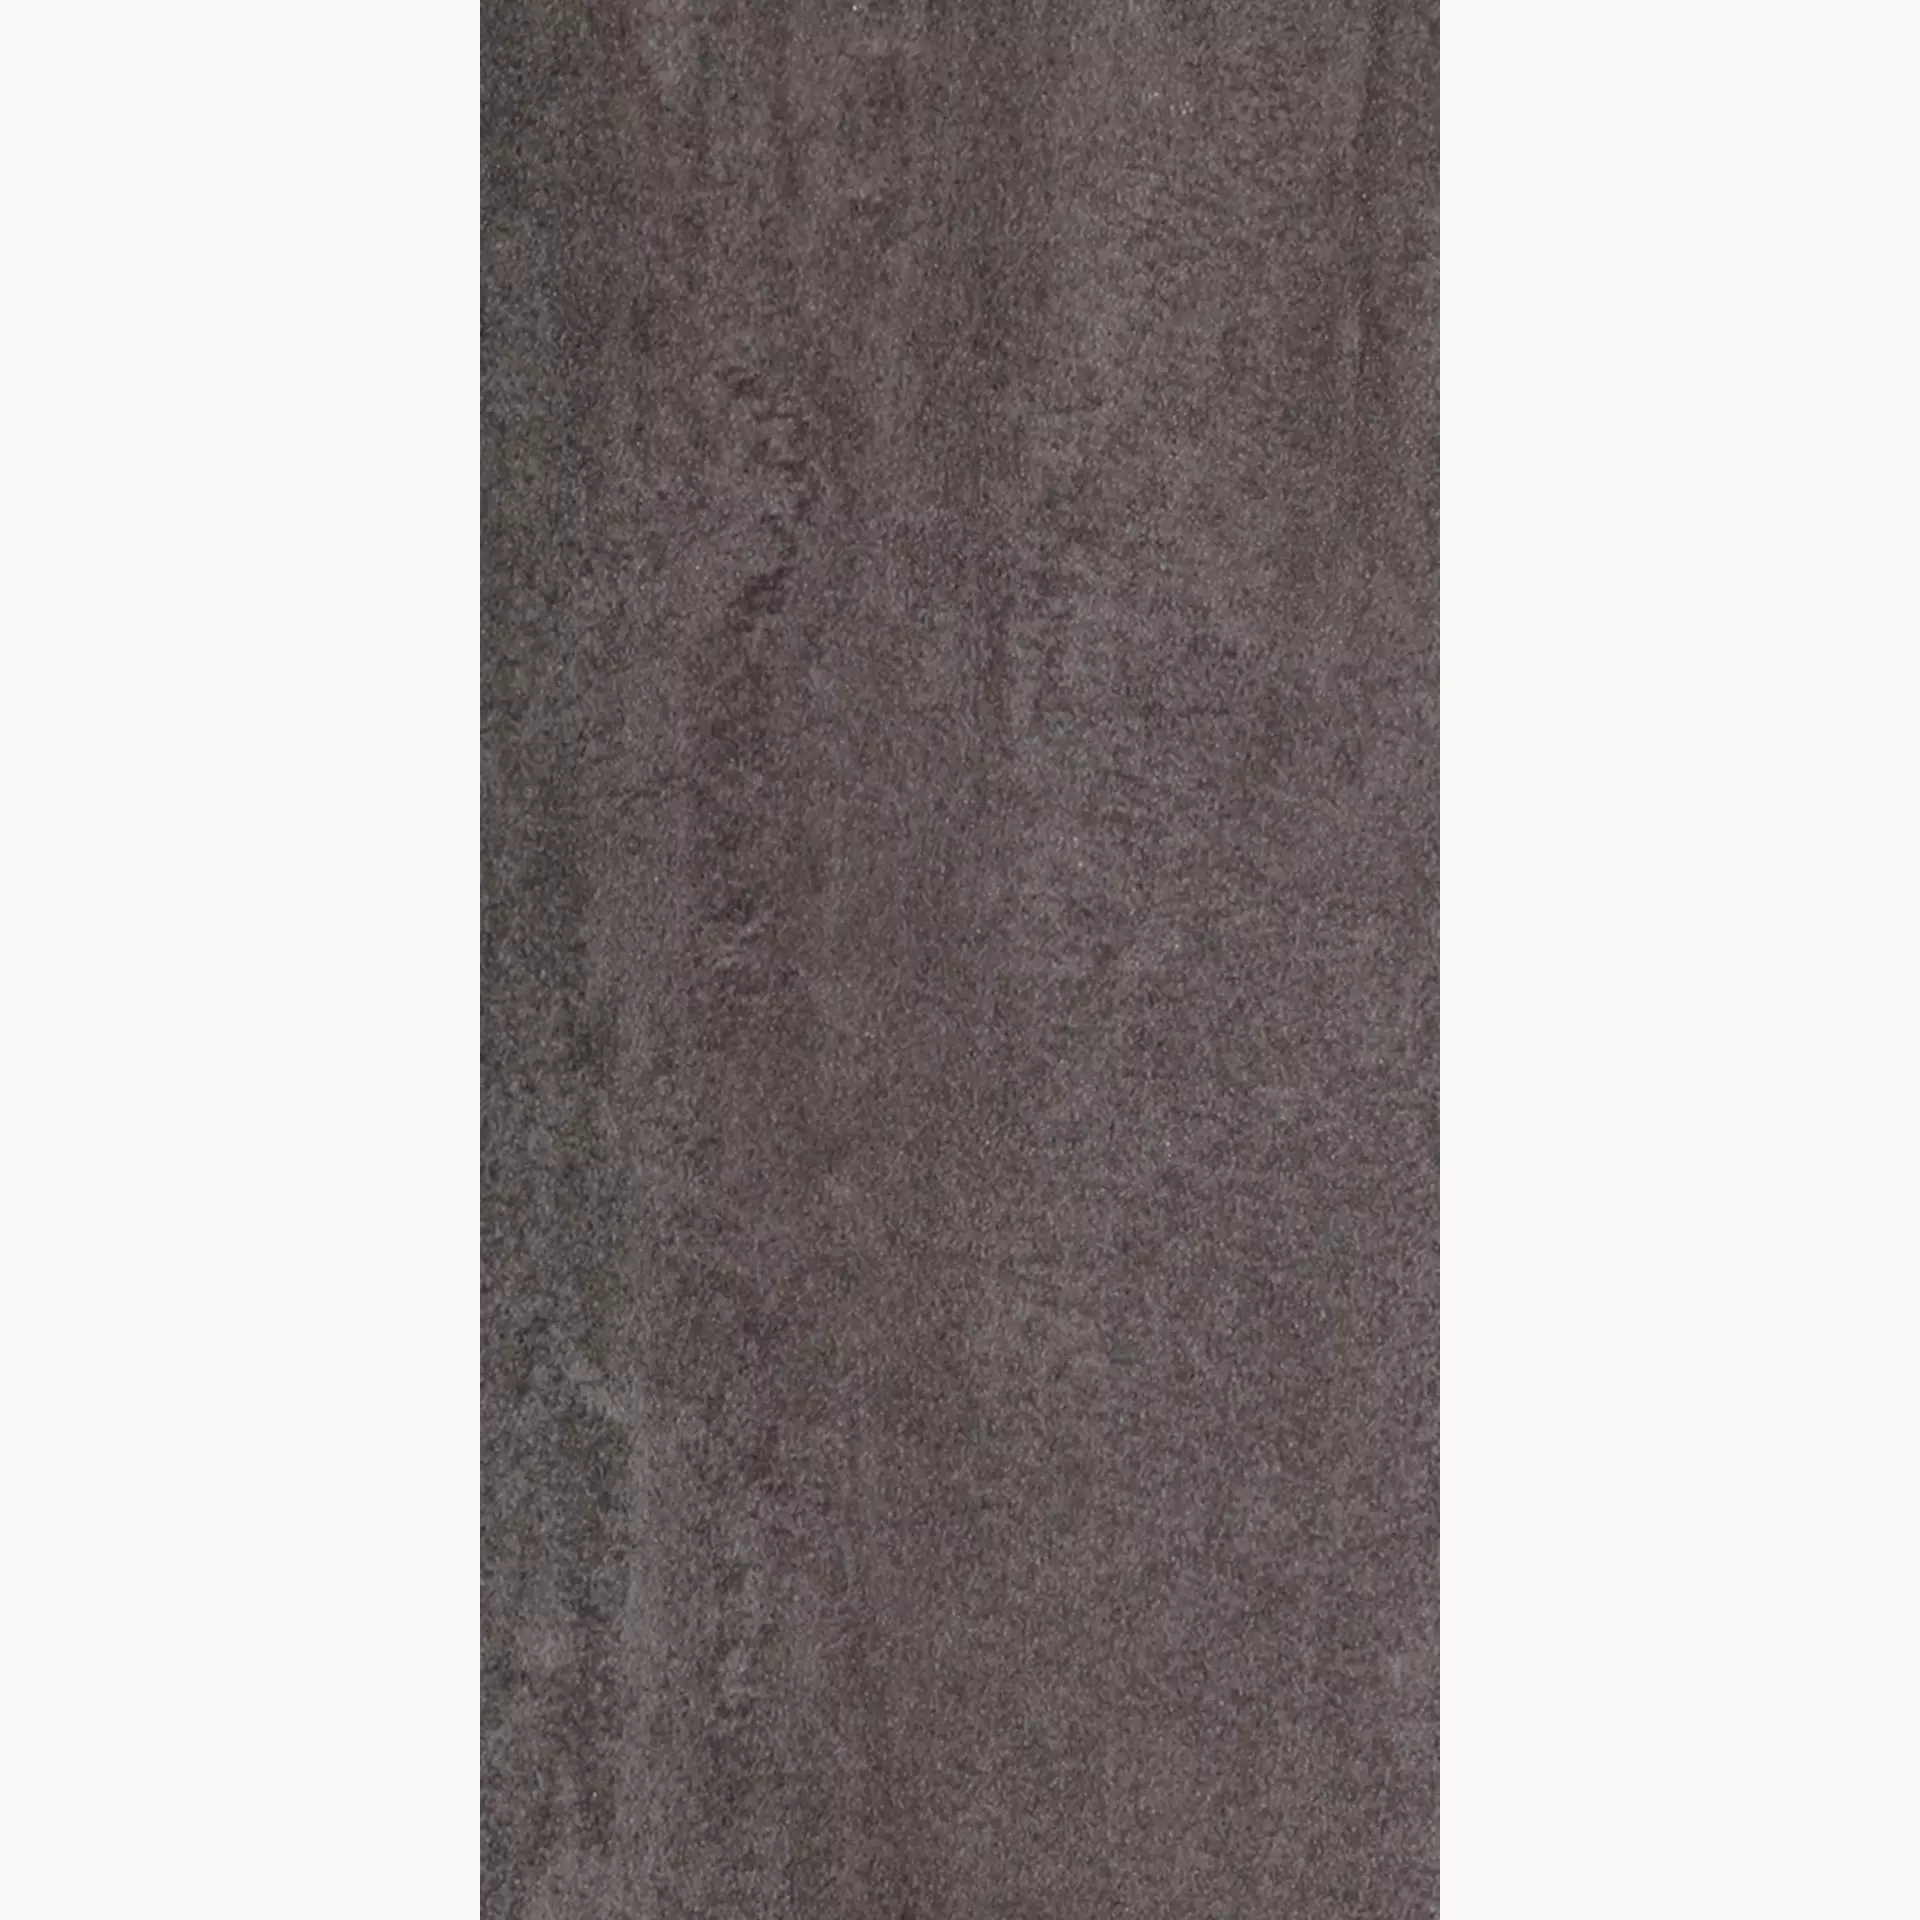 Rondine Contract Grey Naturale J83701 30,5x60,5cm 9,5mm